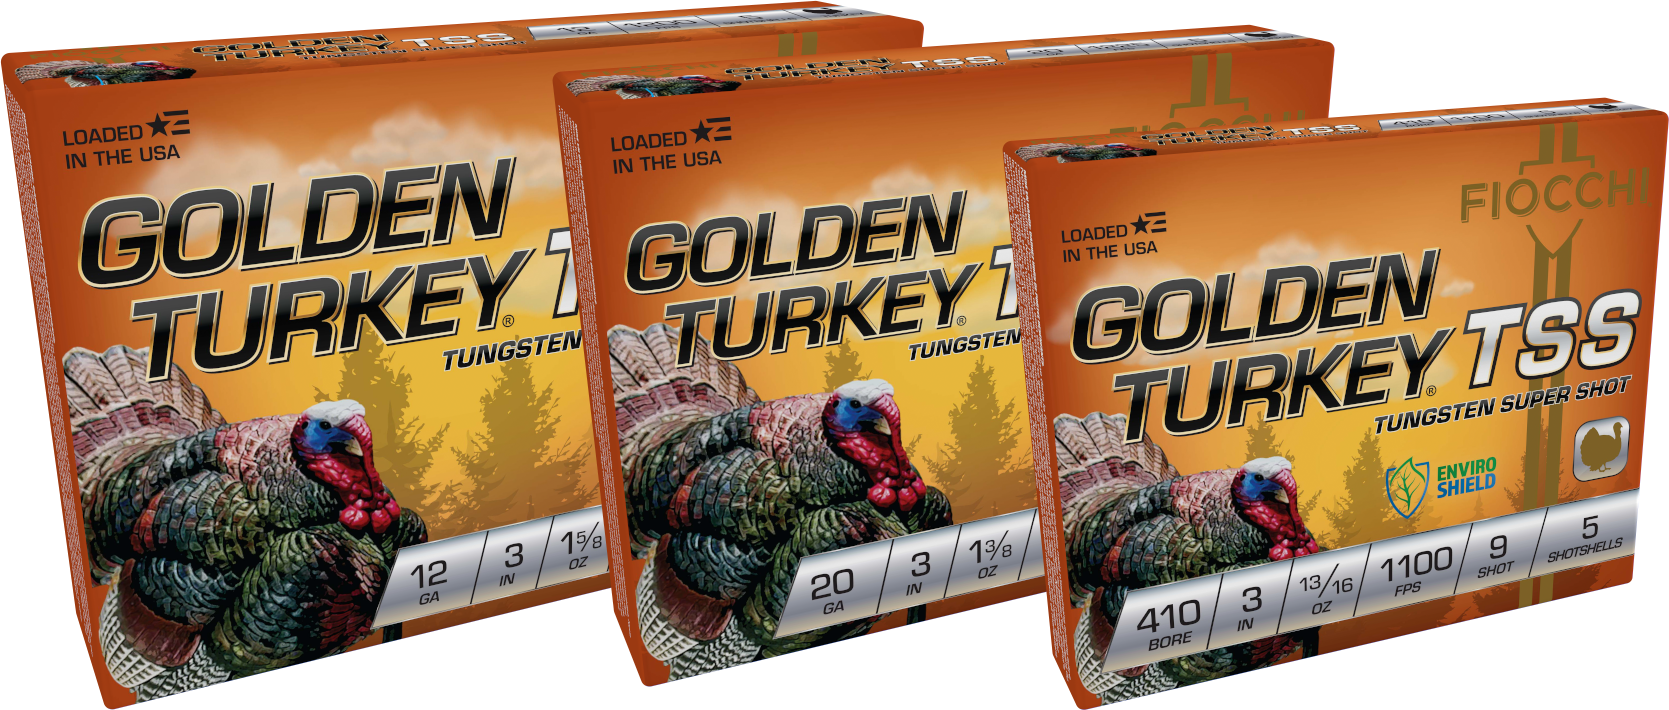 Fiocchi Announces Their New Golden Turkey TSS Shotgun Shells